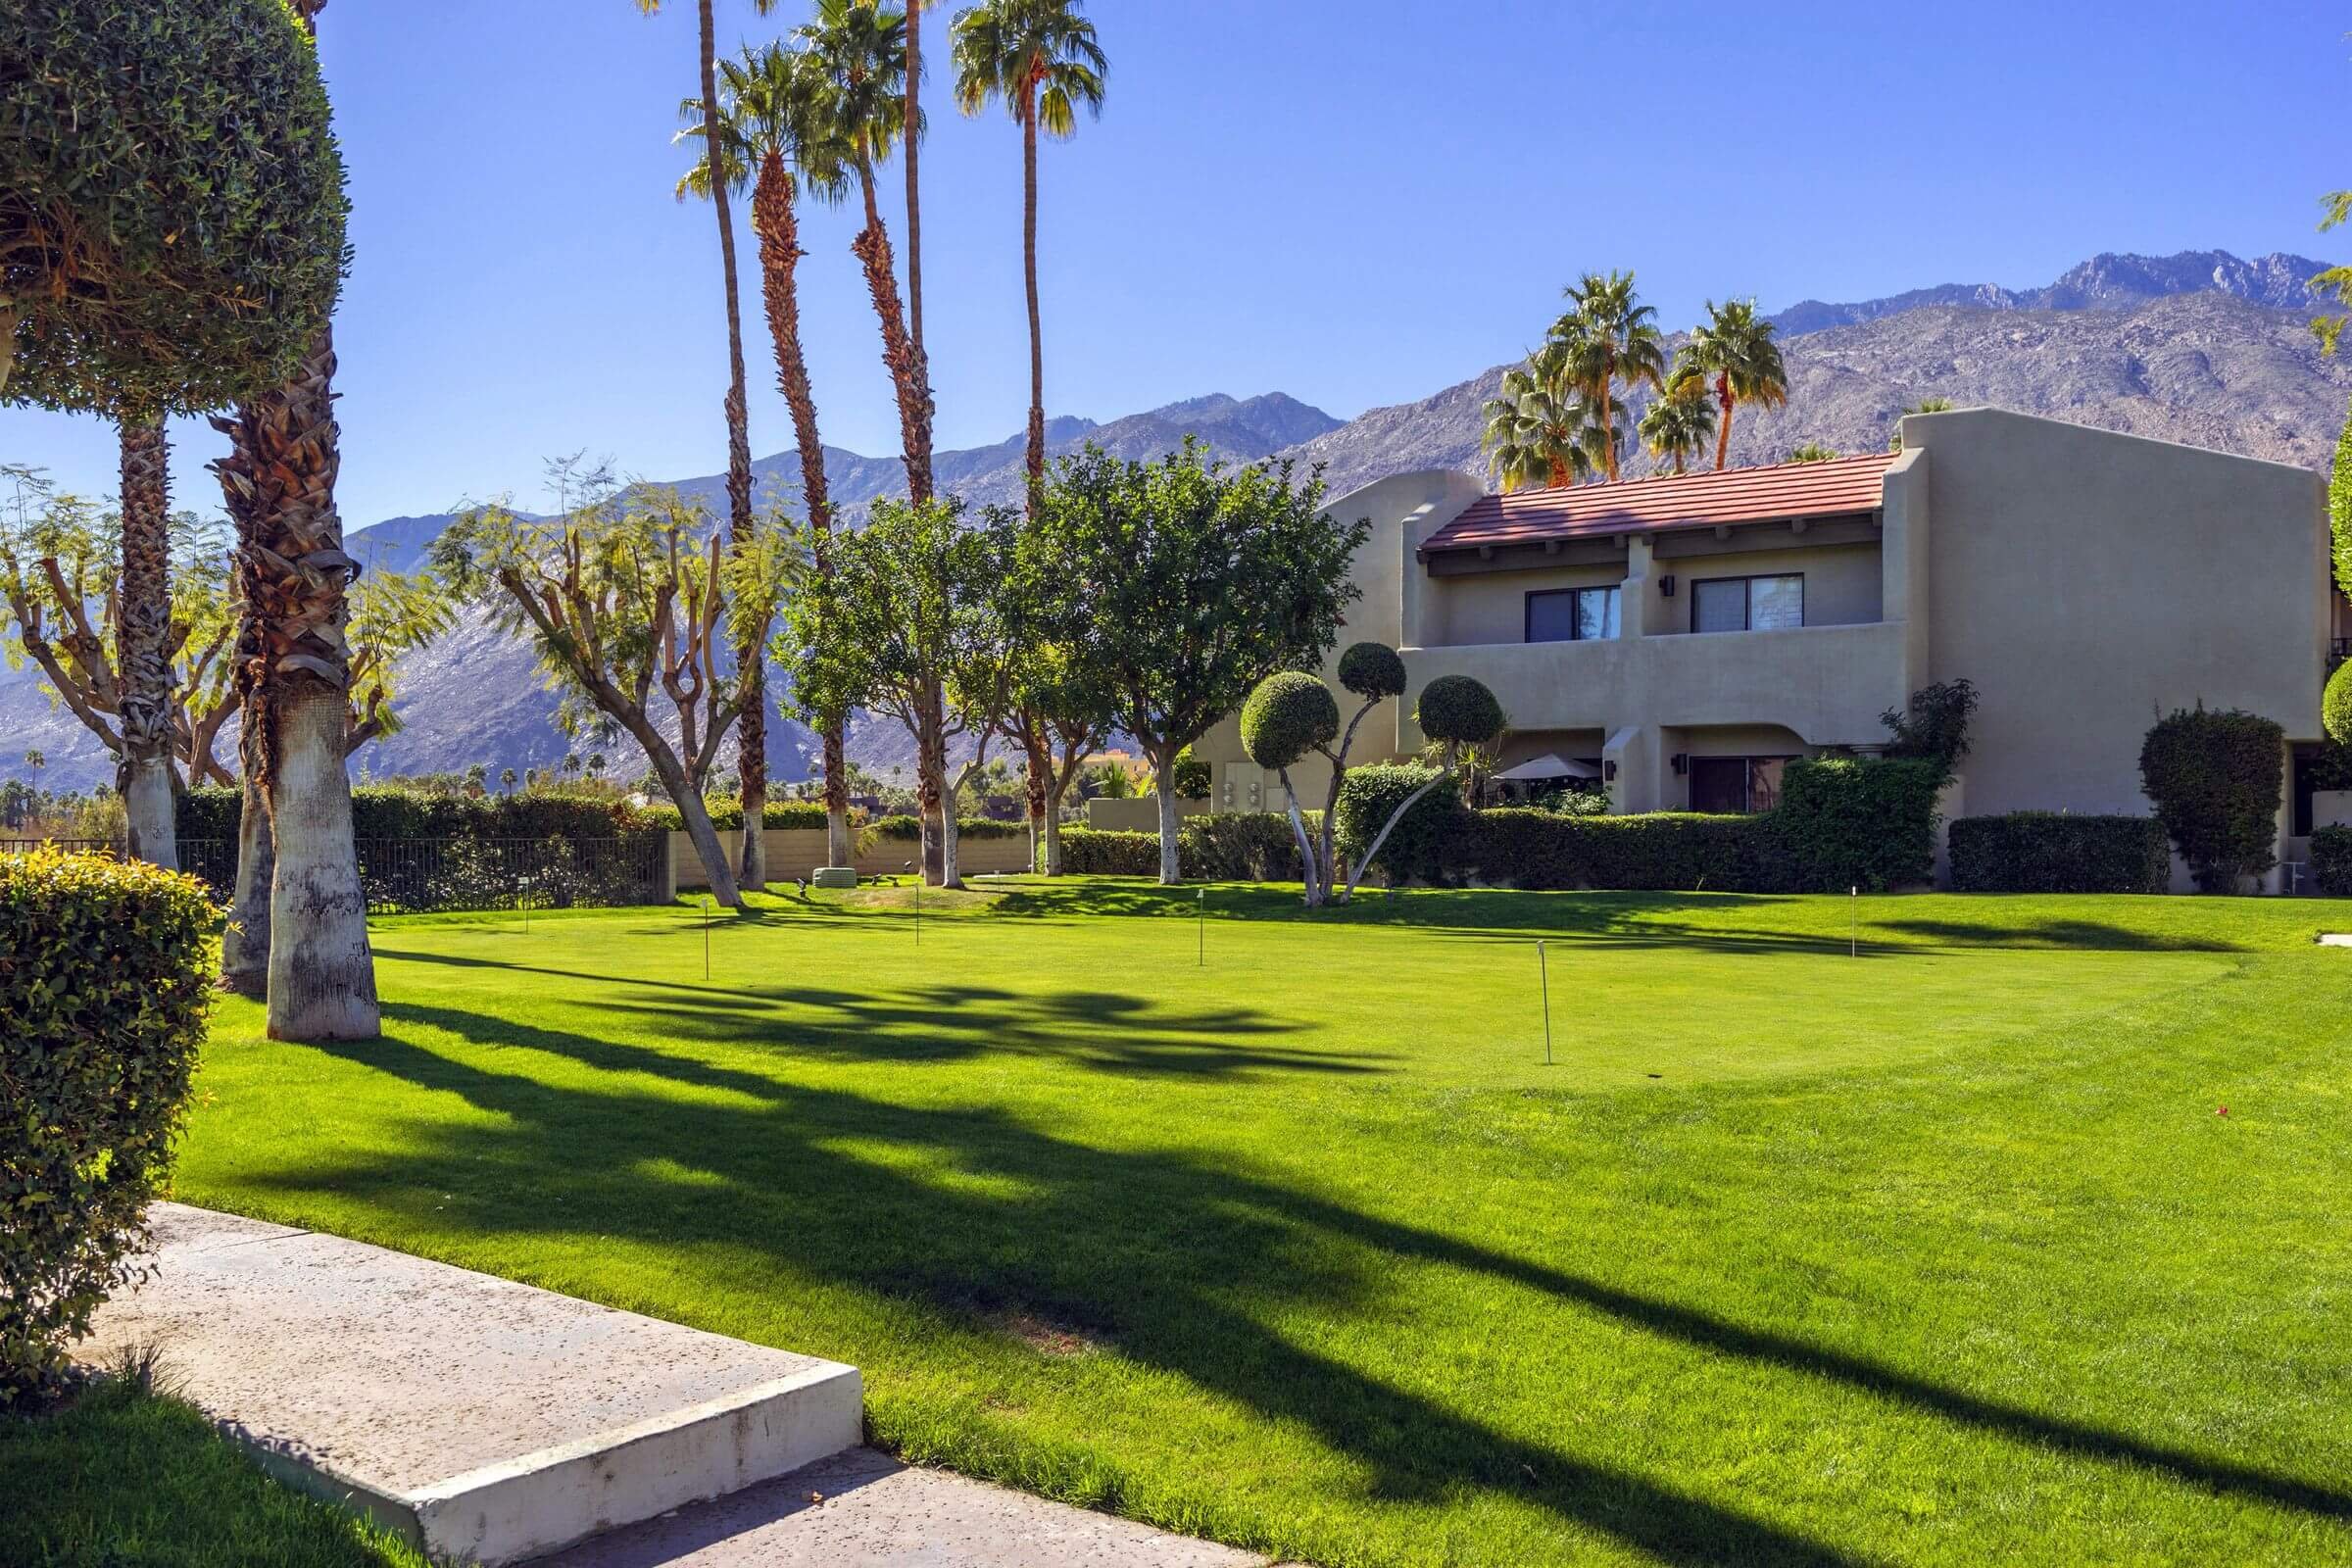 Casa Verde Palm Springs 92262